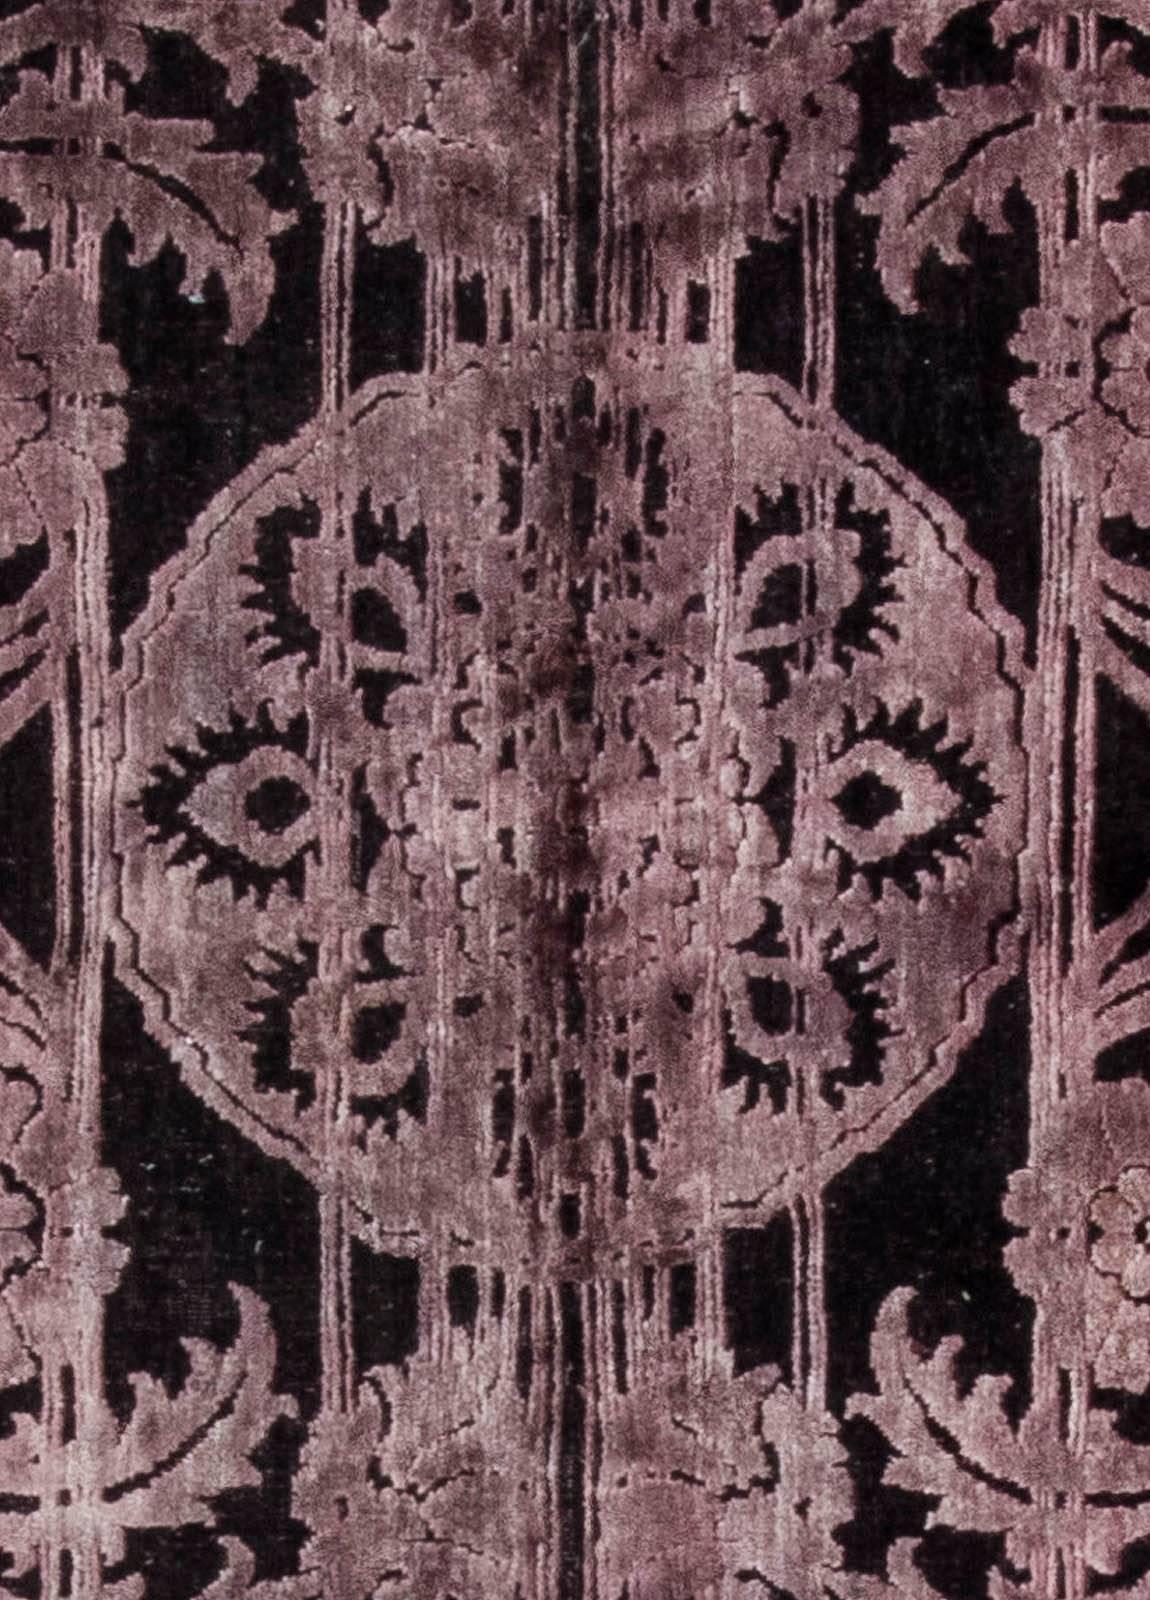 Modern hand-tufted purple Indian wool carpet by Doris Leslie Blau.
Size: 7'4